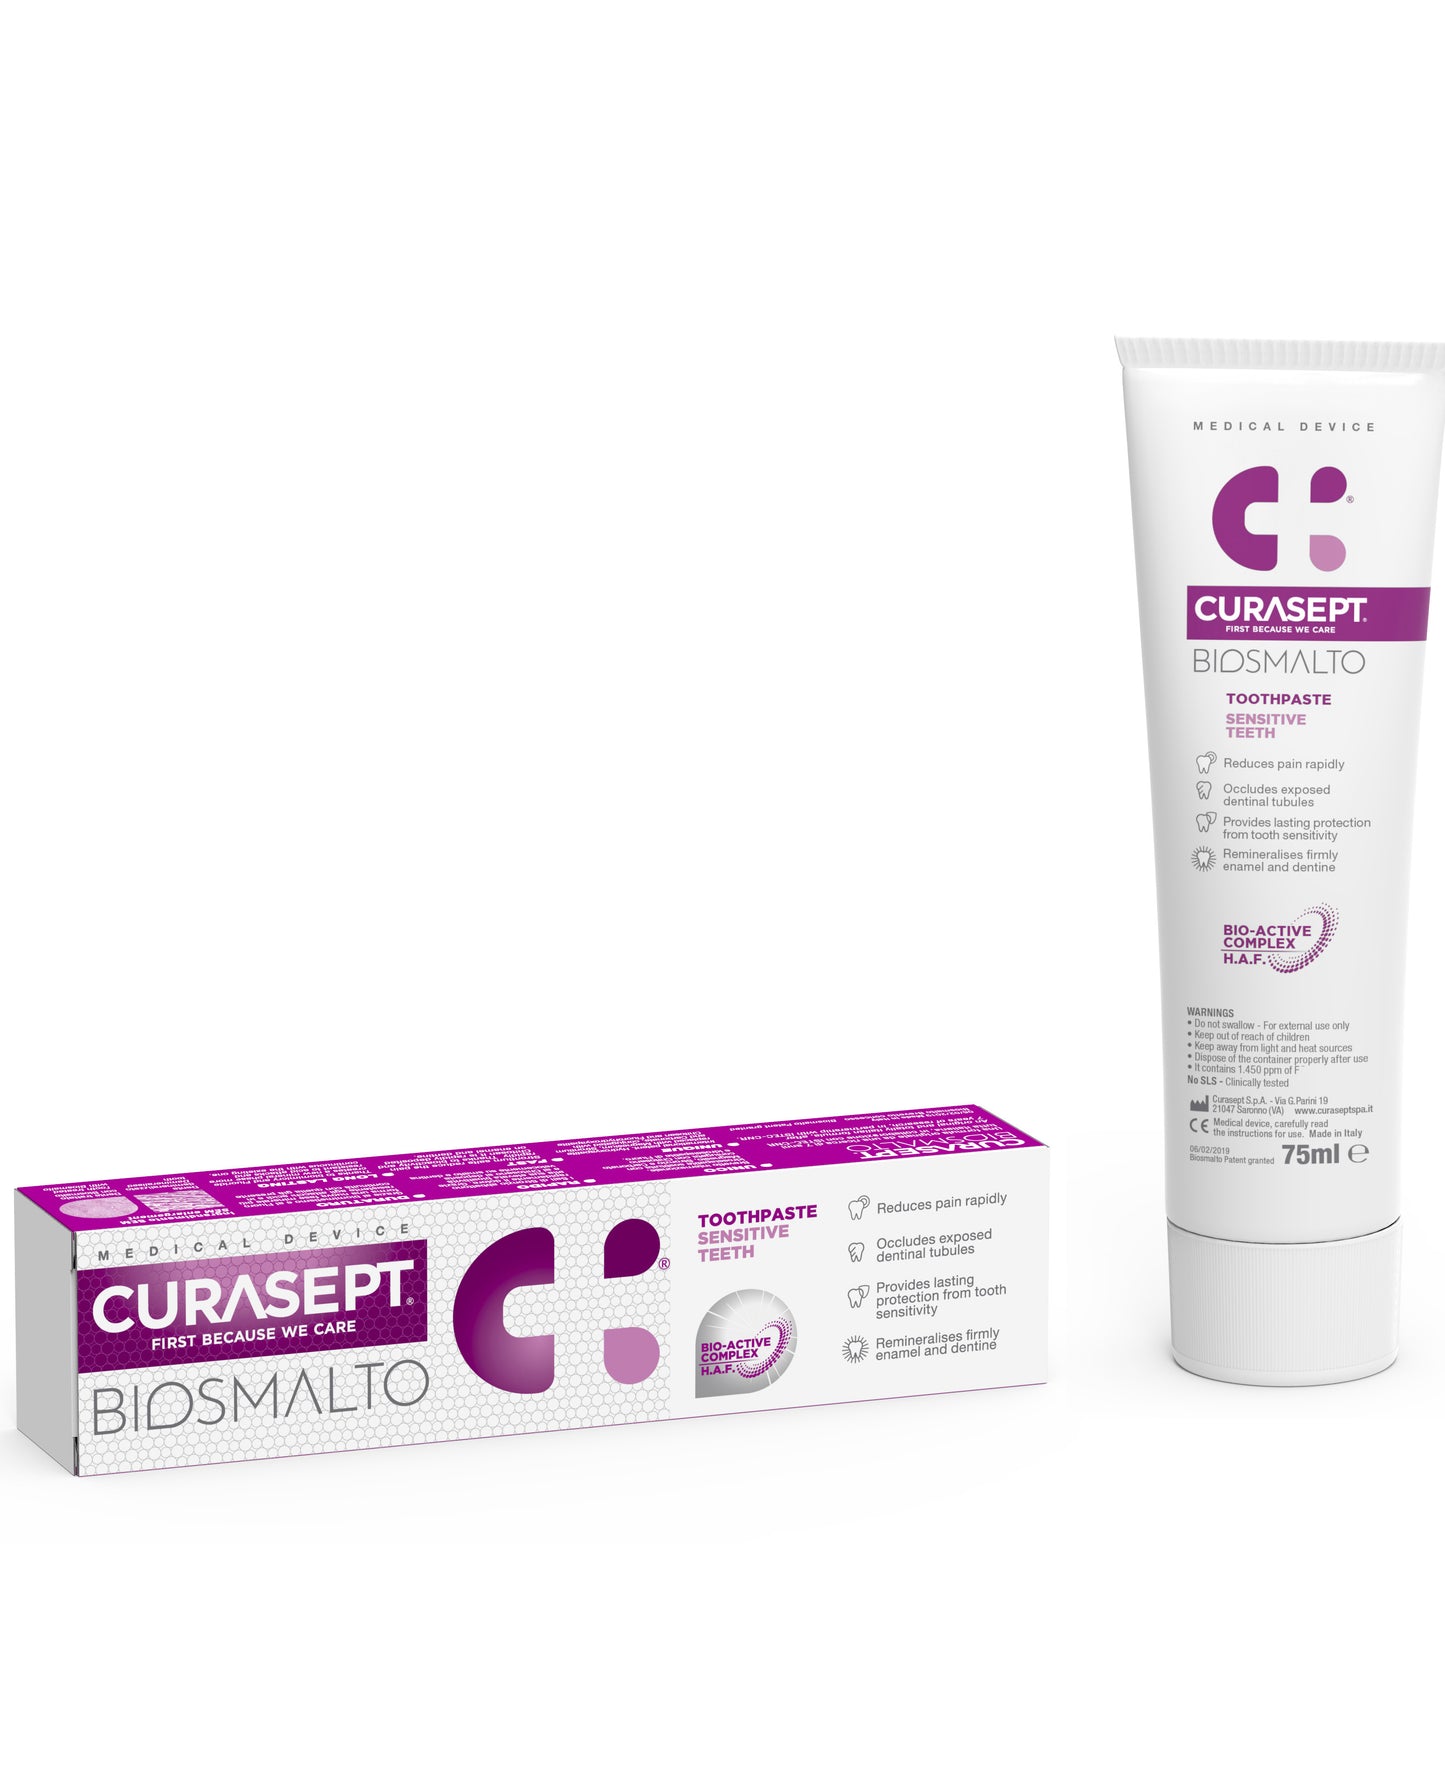 Curasept Biosmalto Toothpaste For Sensitive Teeth